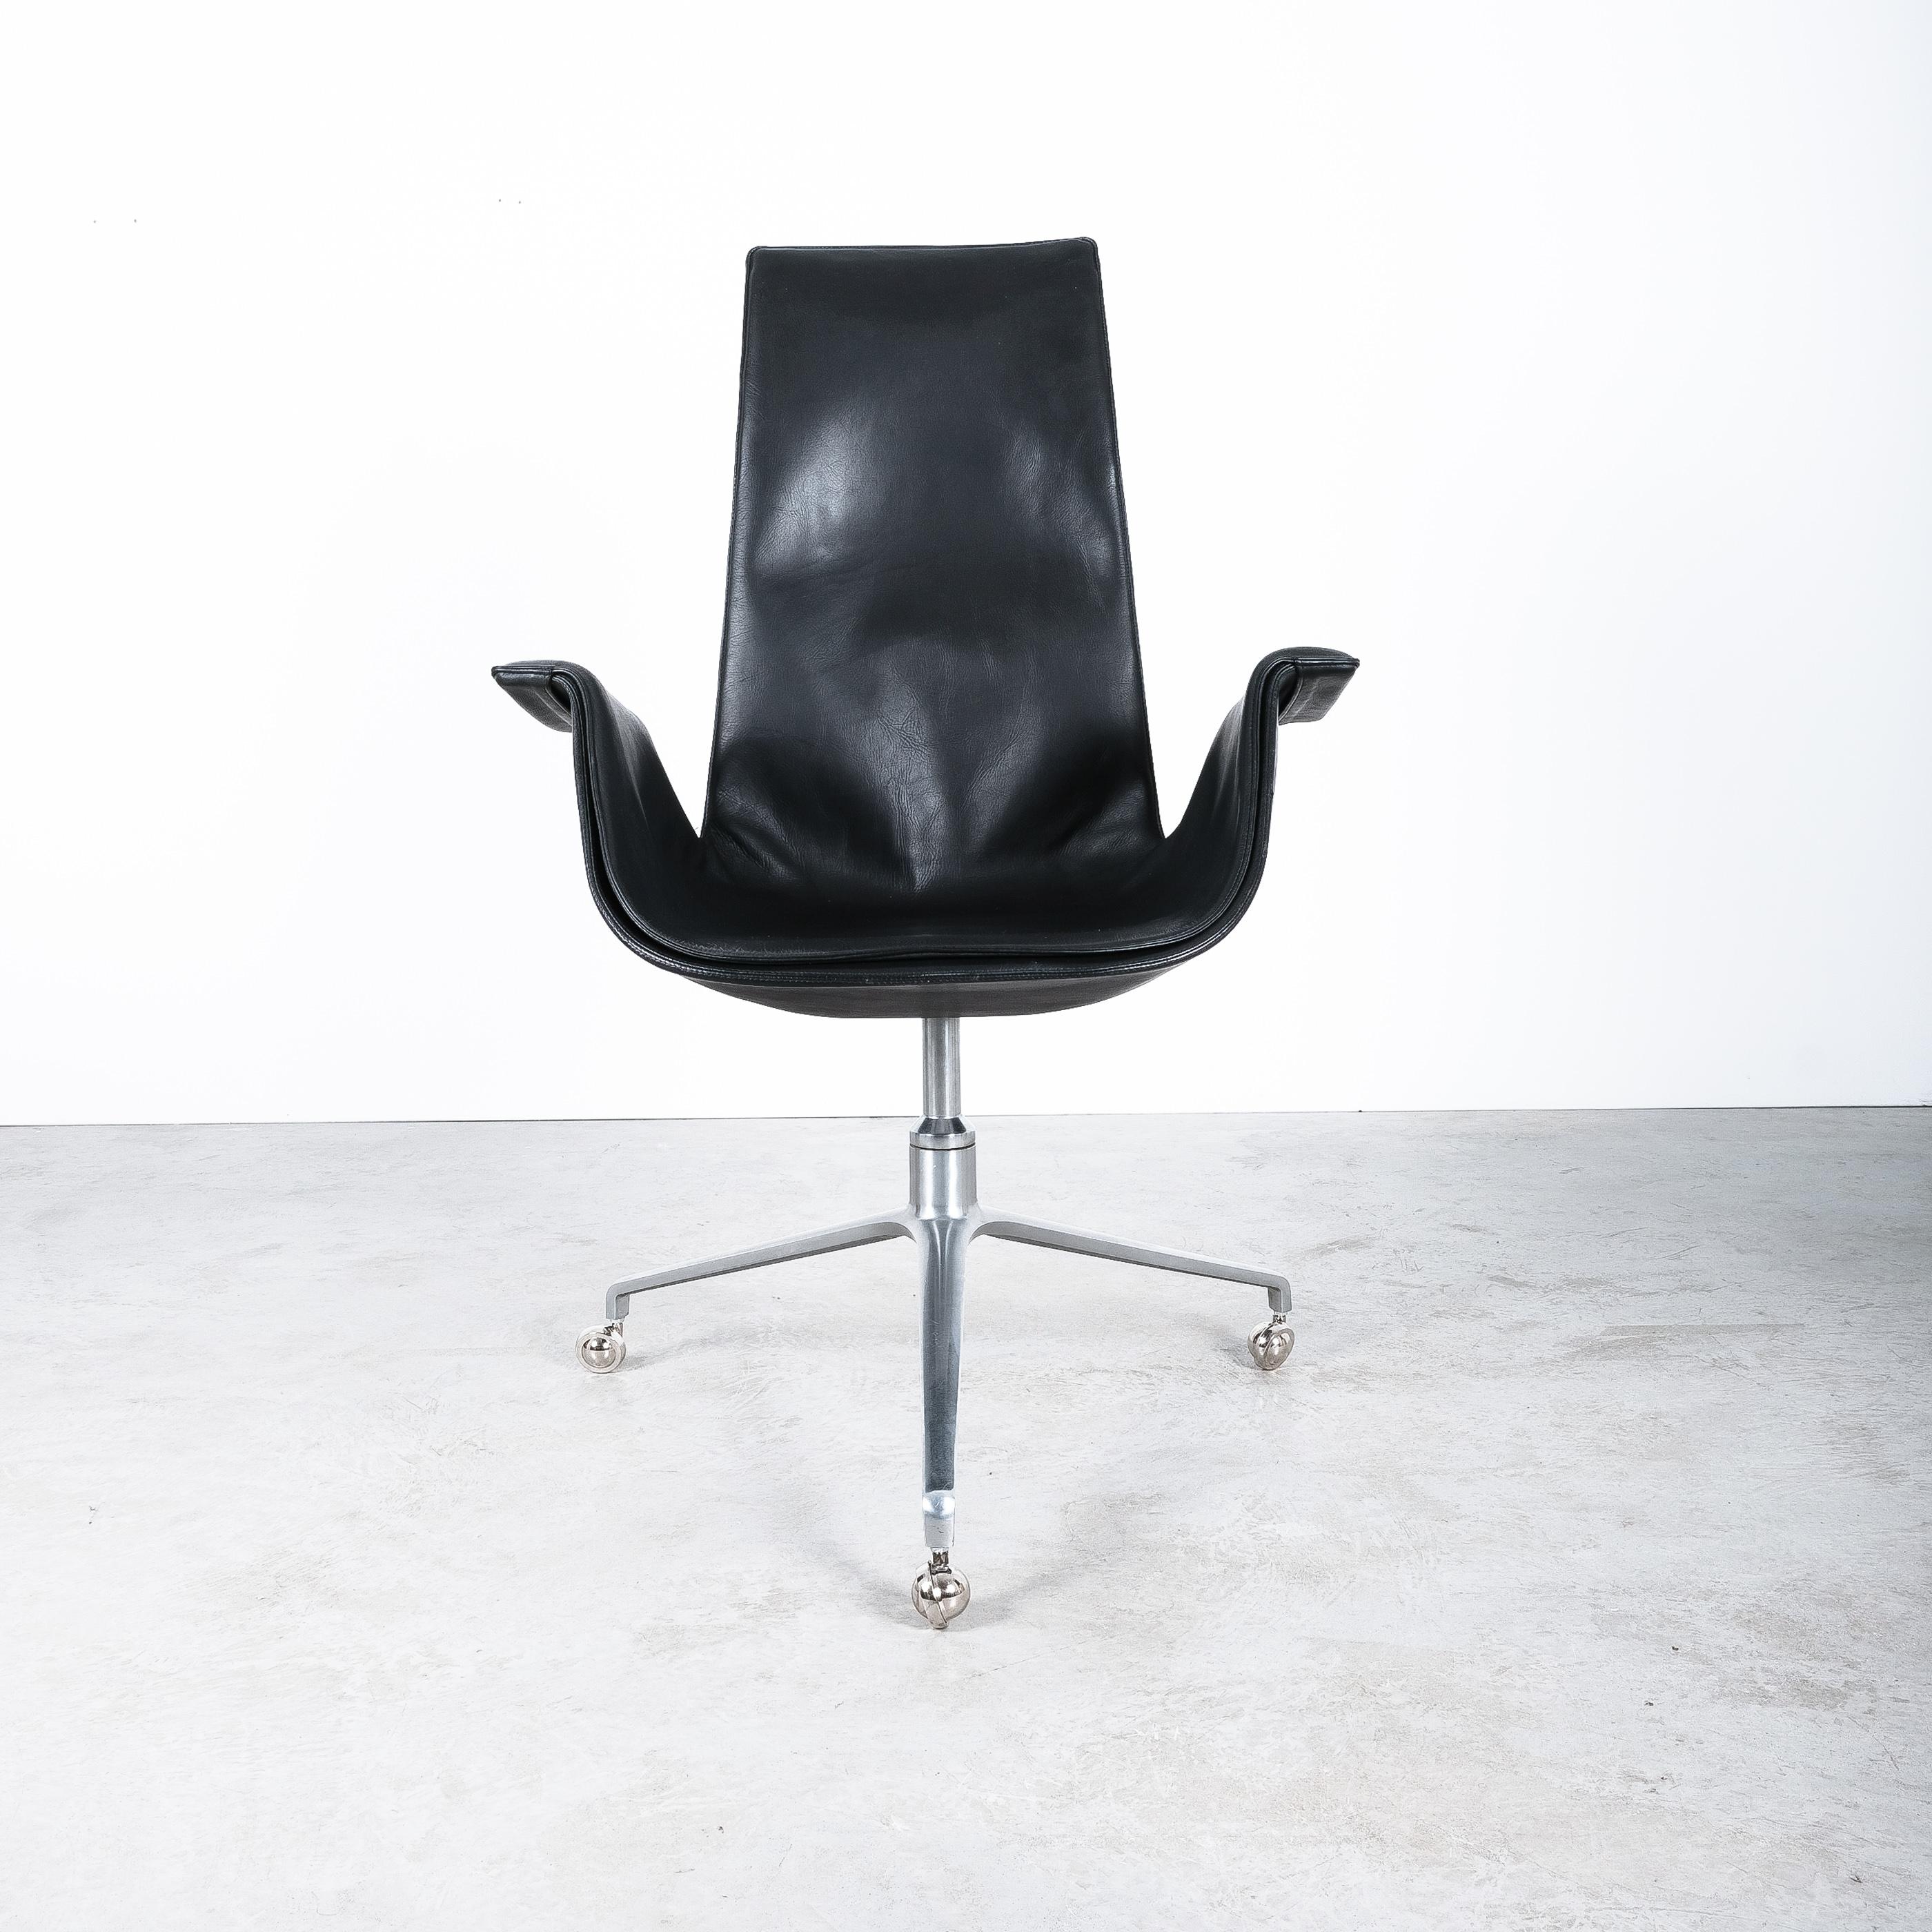 Original midcentury black leather desk chair (seat height 19